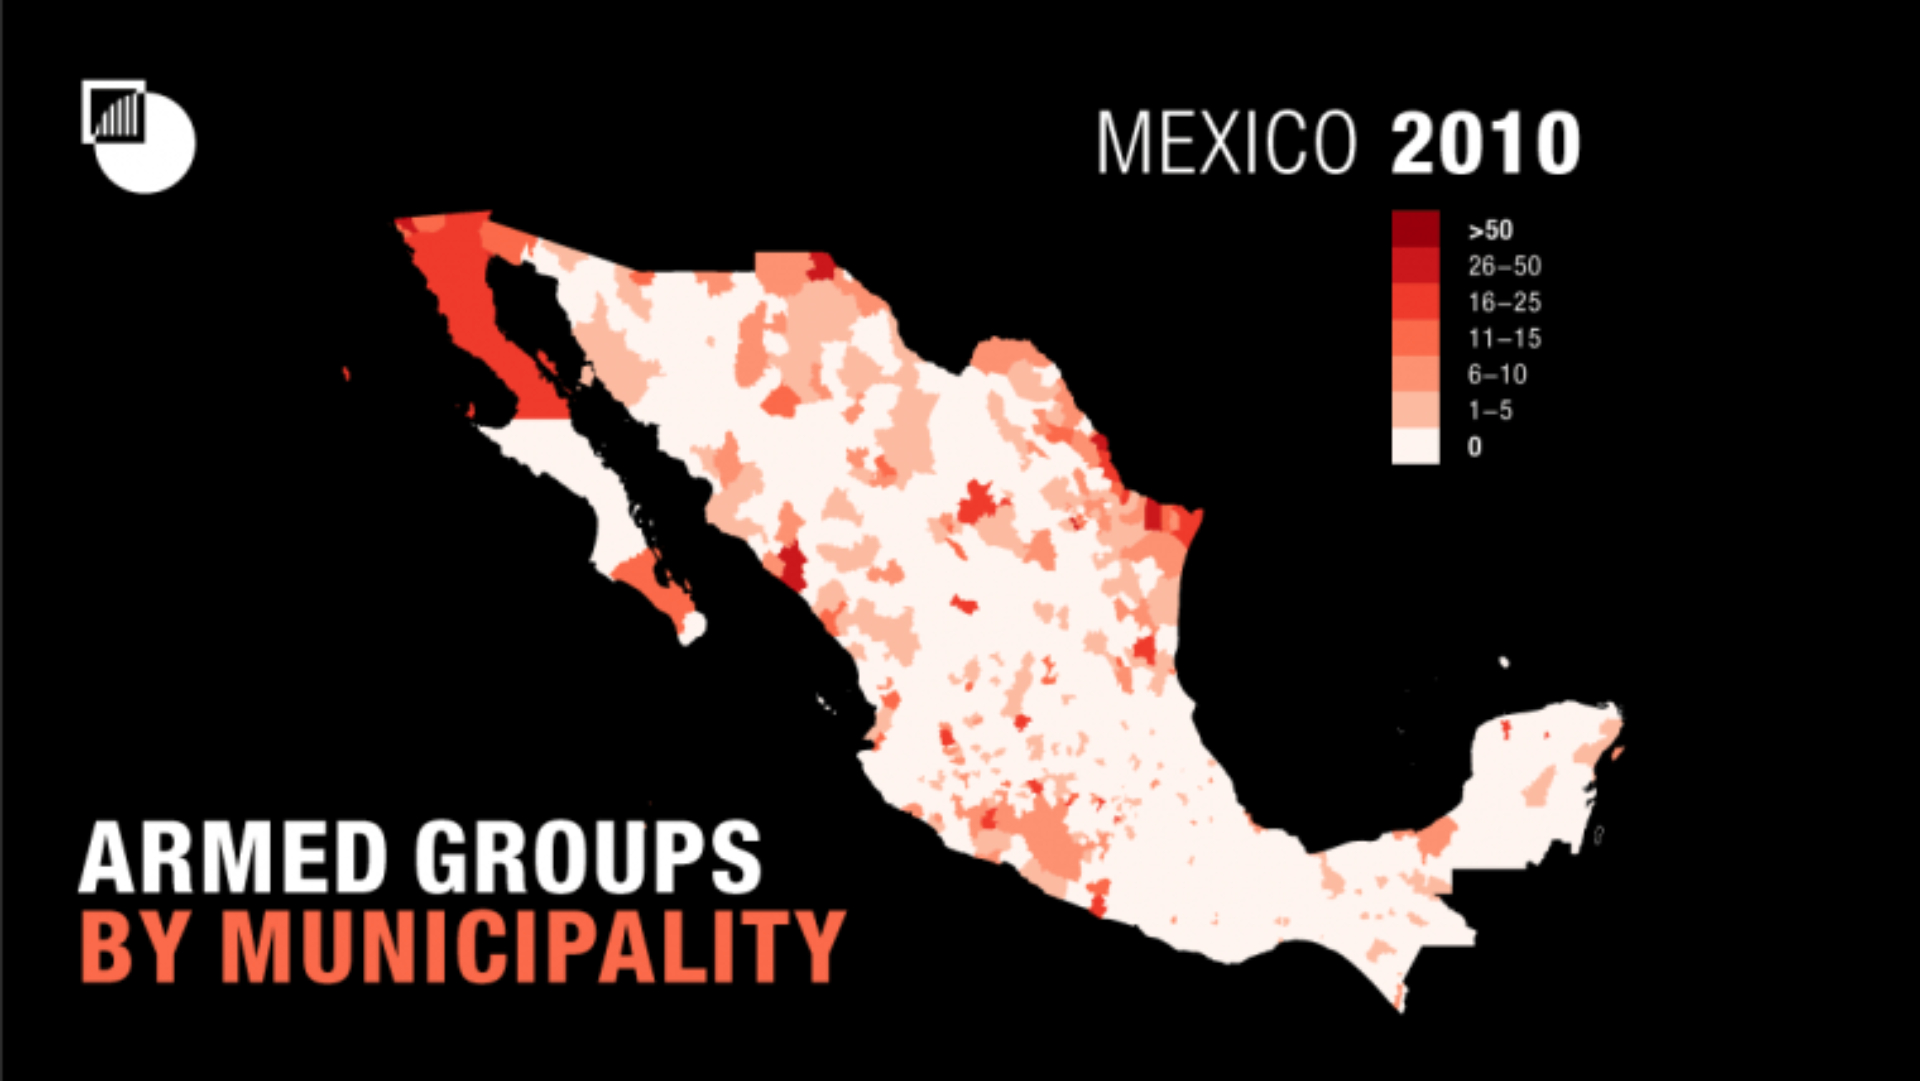 El mapa de grupos armados en México para 2010 (Foto: The International Crisis Group)